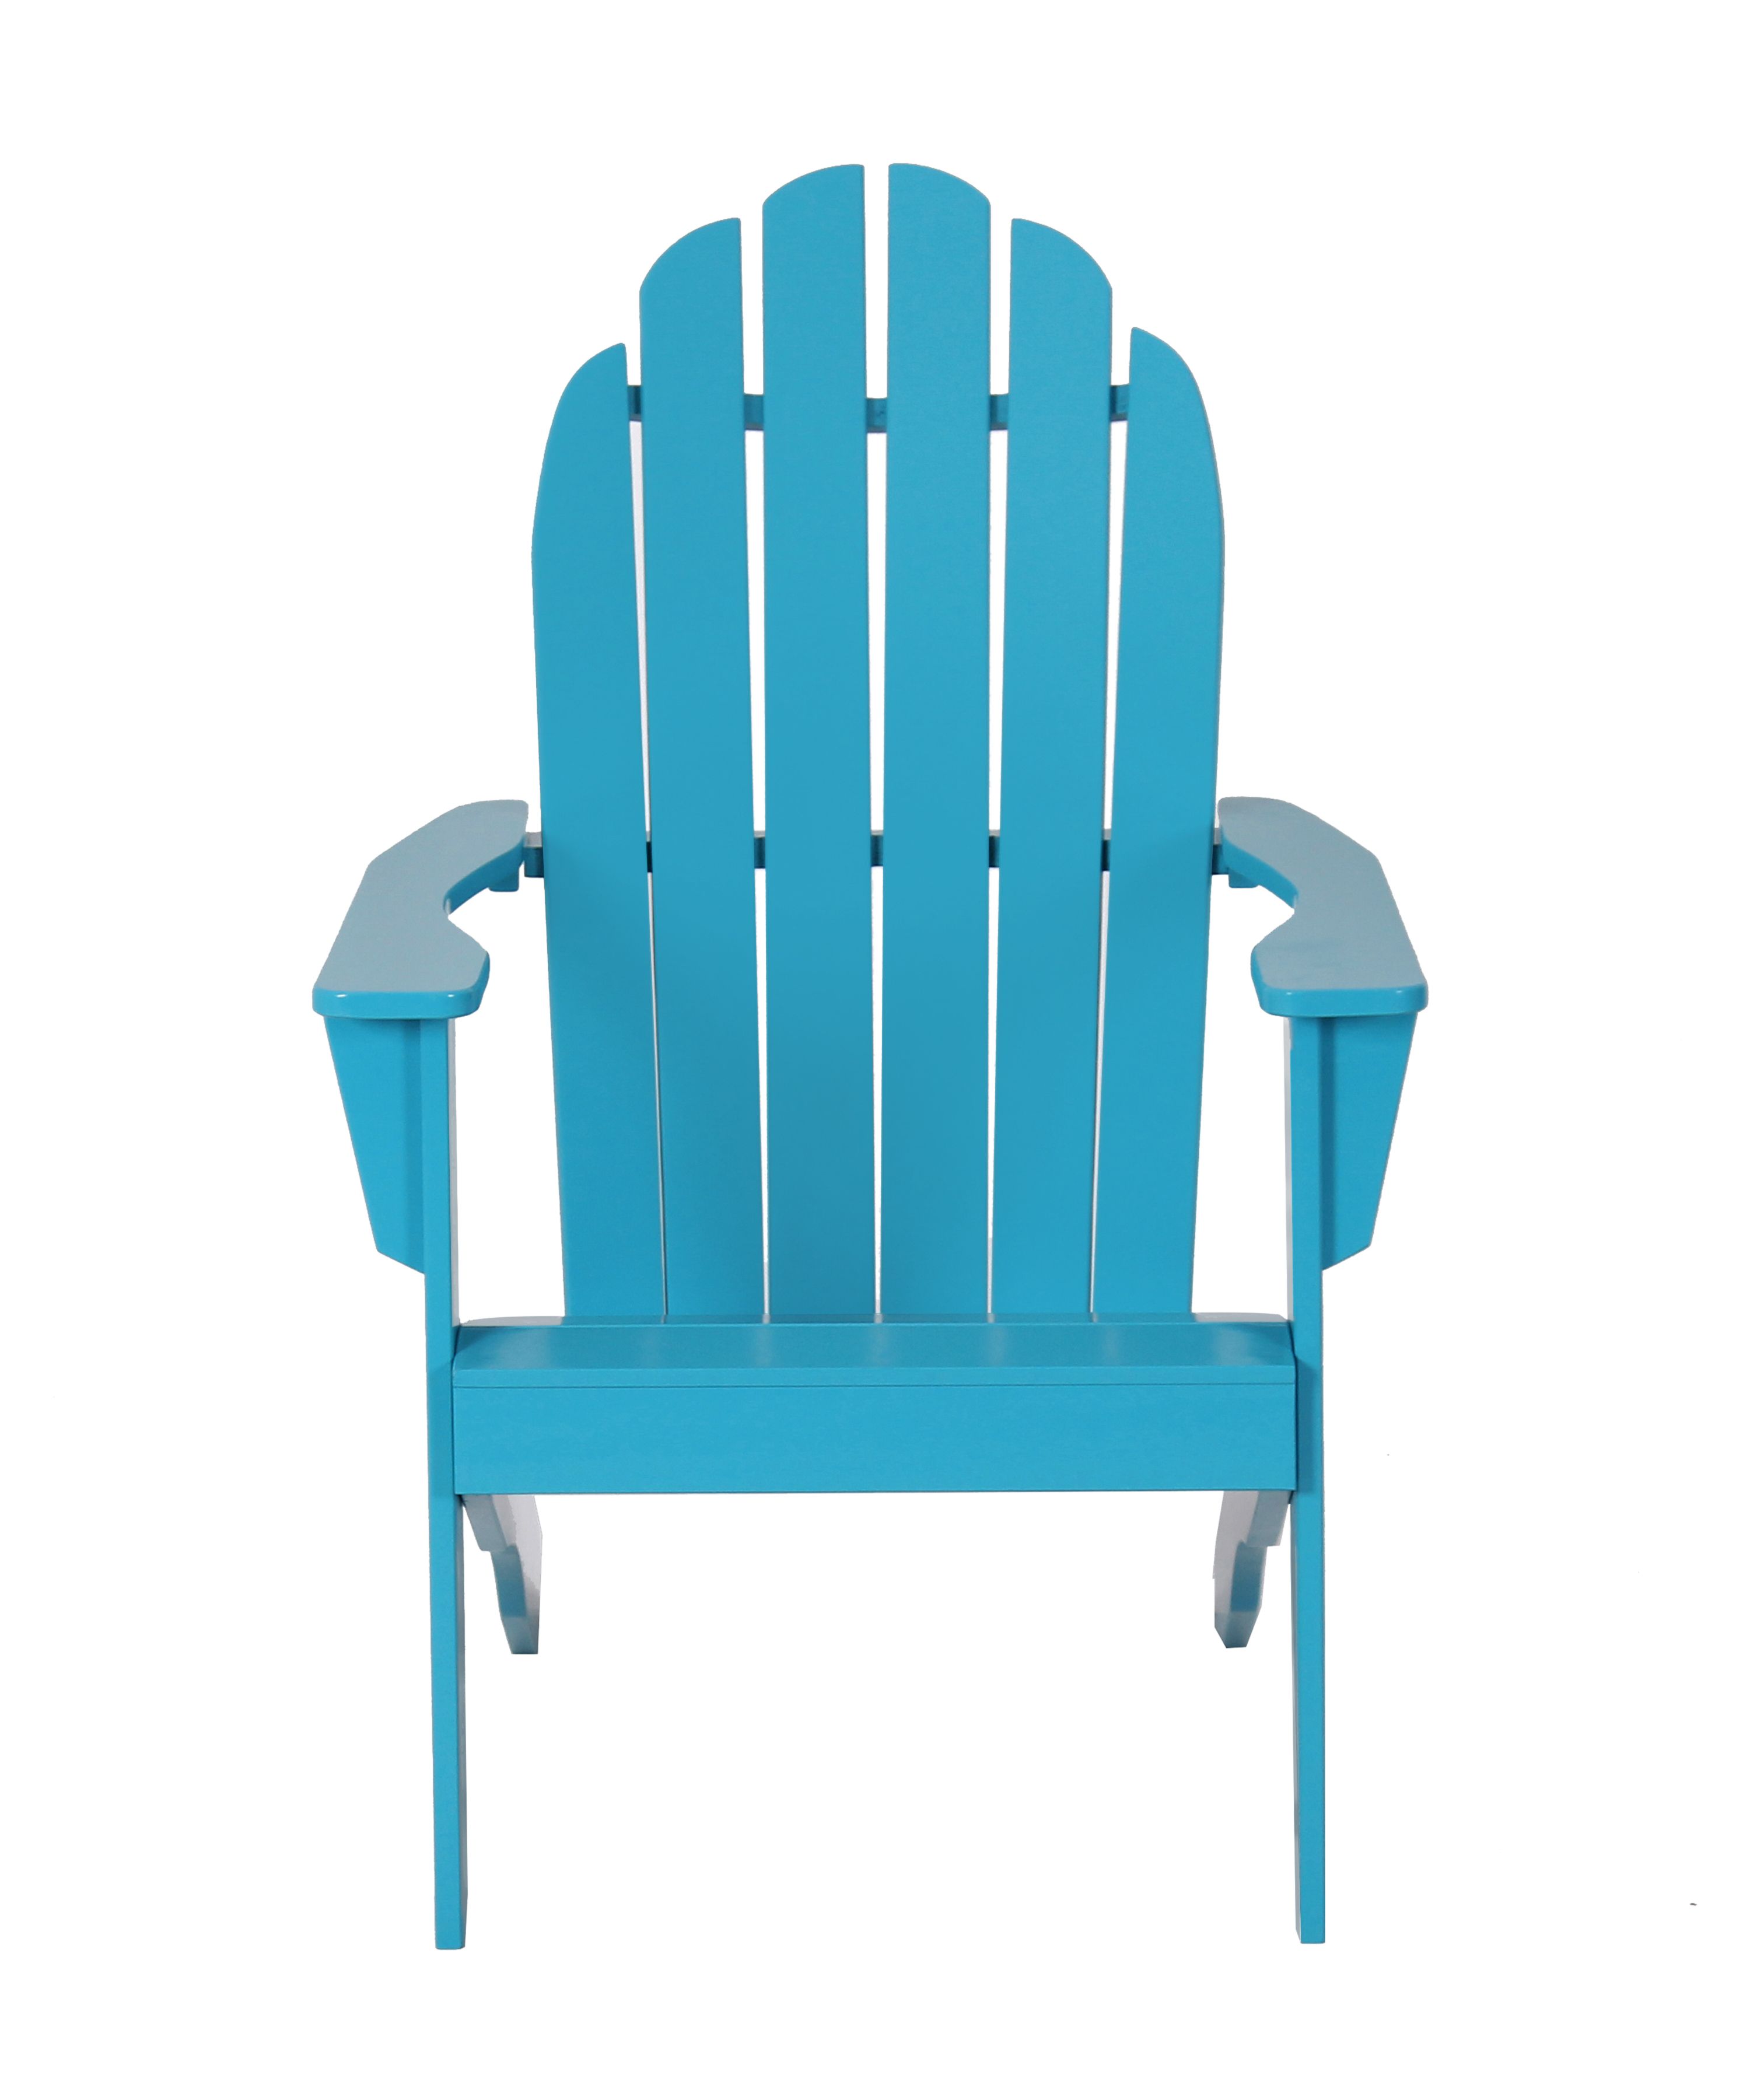 Mainstays Rubberwood Adirondack Chair - Turquoise - image 2 of 8